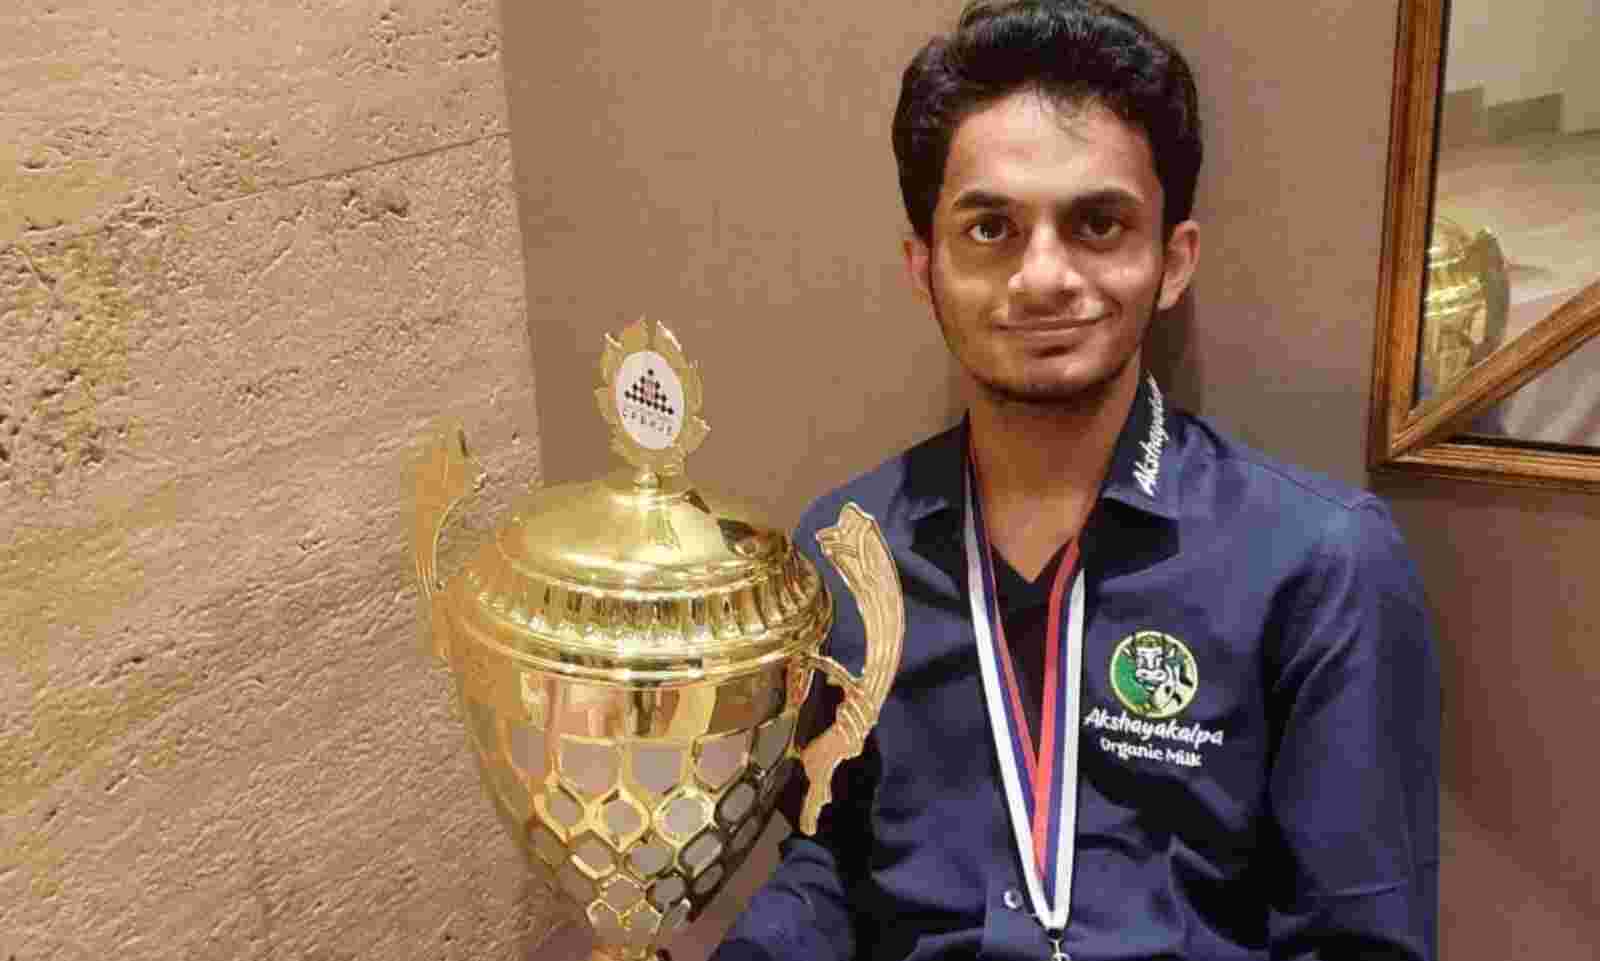 14-year-old Aditya Mittal earns first Grandmaster title